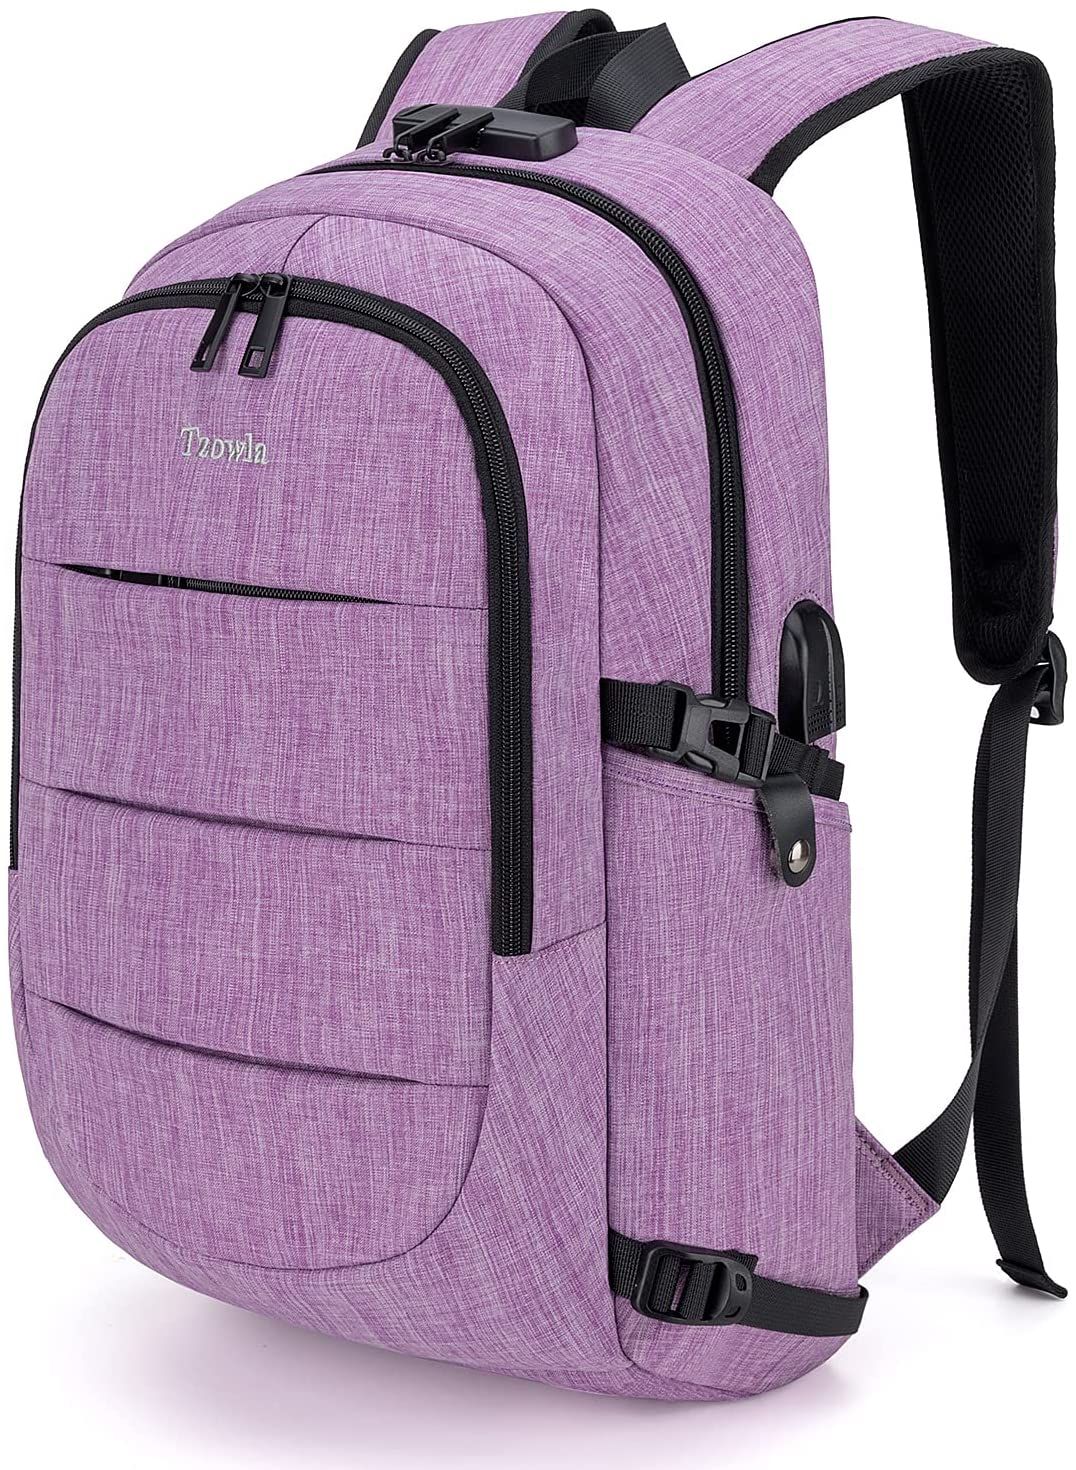 Tzowla Backpack Design 1